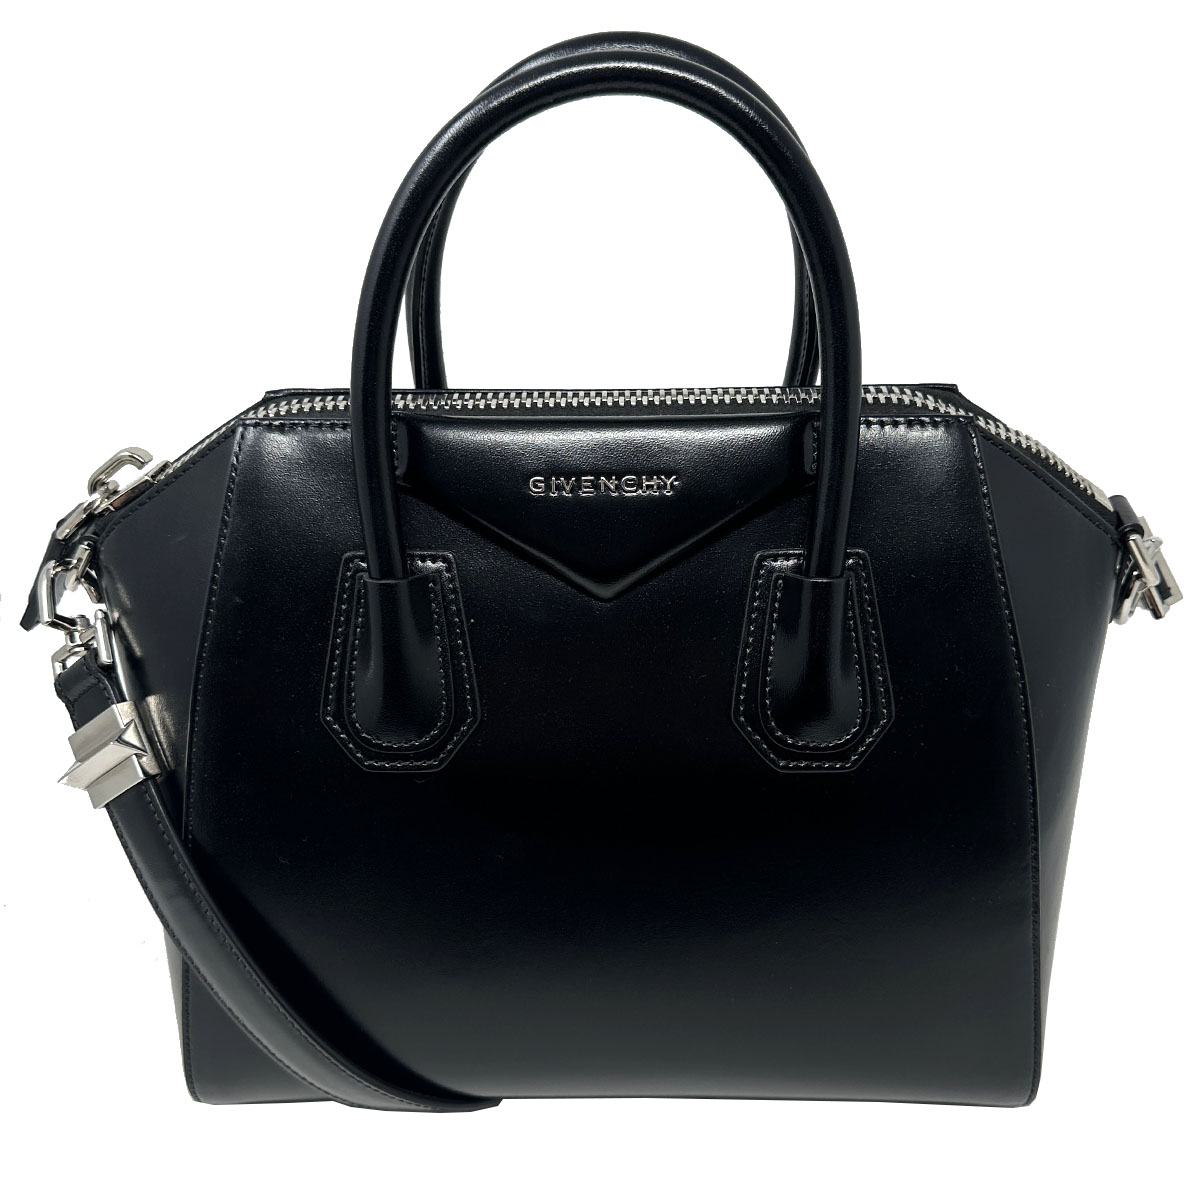 Givenchy Antigona - Mini Bag Black Leather